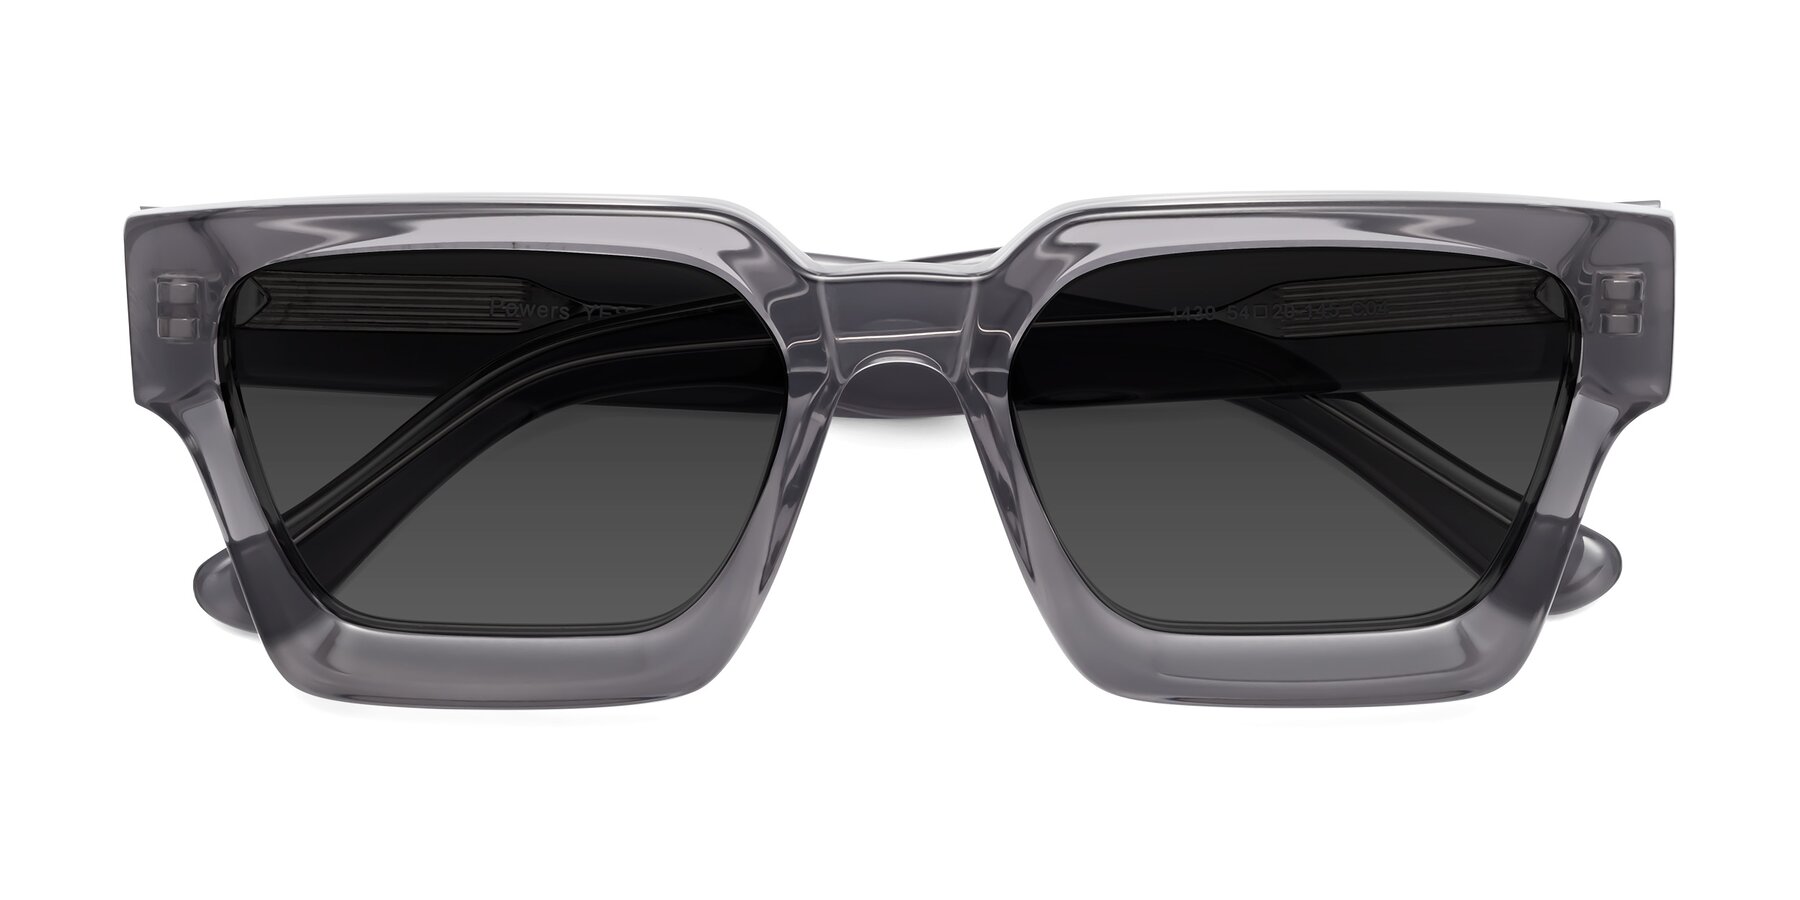 Louis Vuitton 1.1 Millionaires Sunglasses White Acetate. Size E